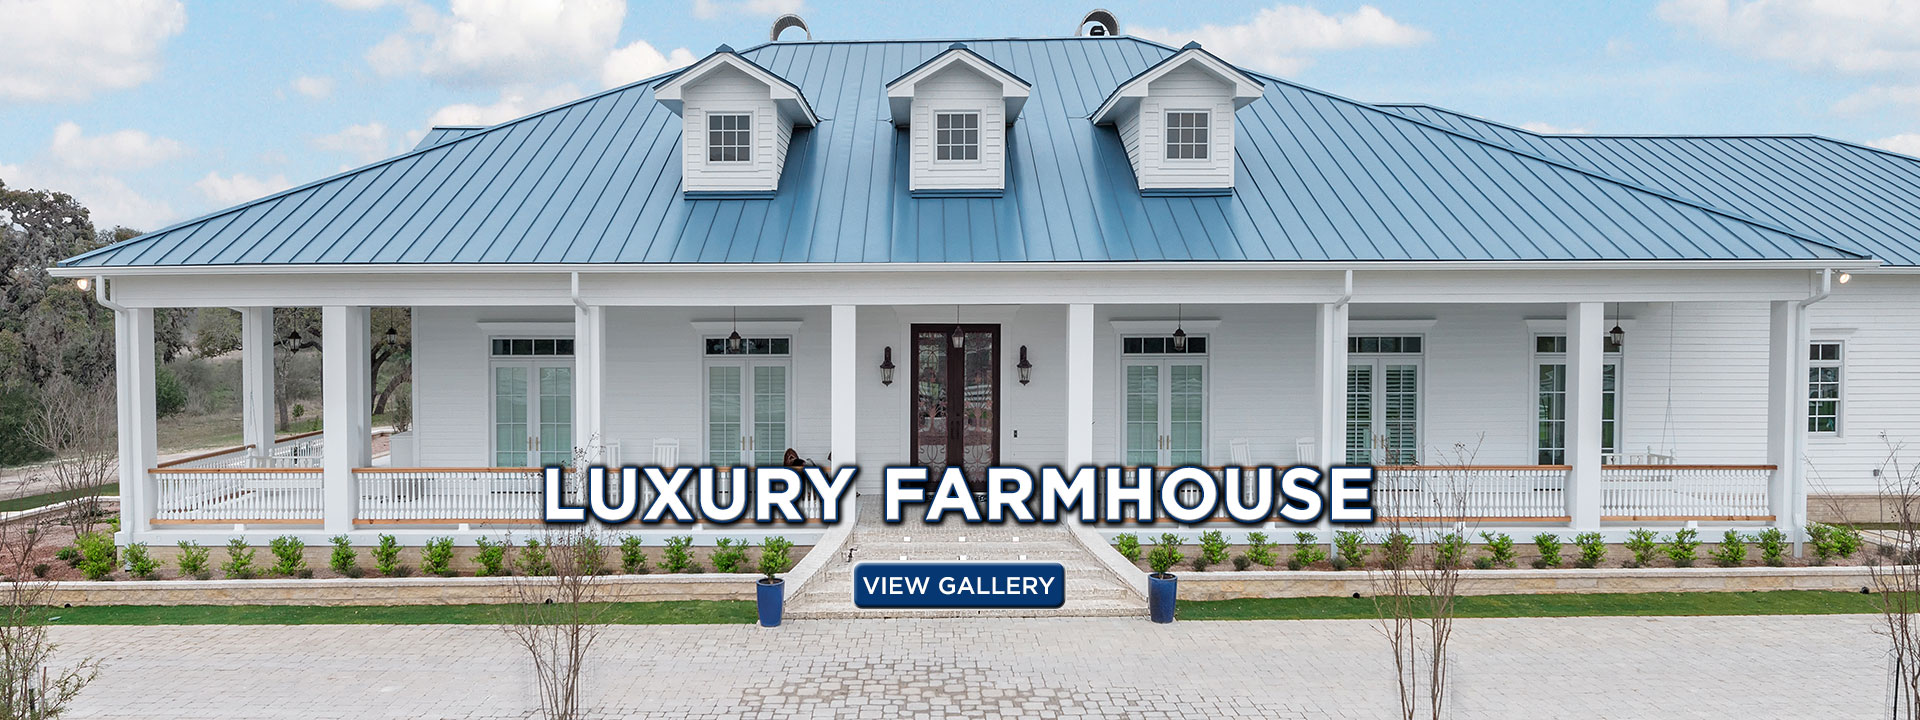 Luxury Farmhouse, San Antonio Custom Home Builder